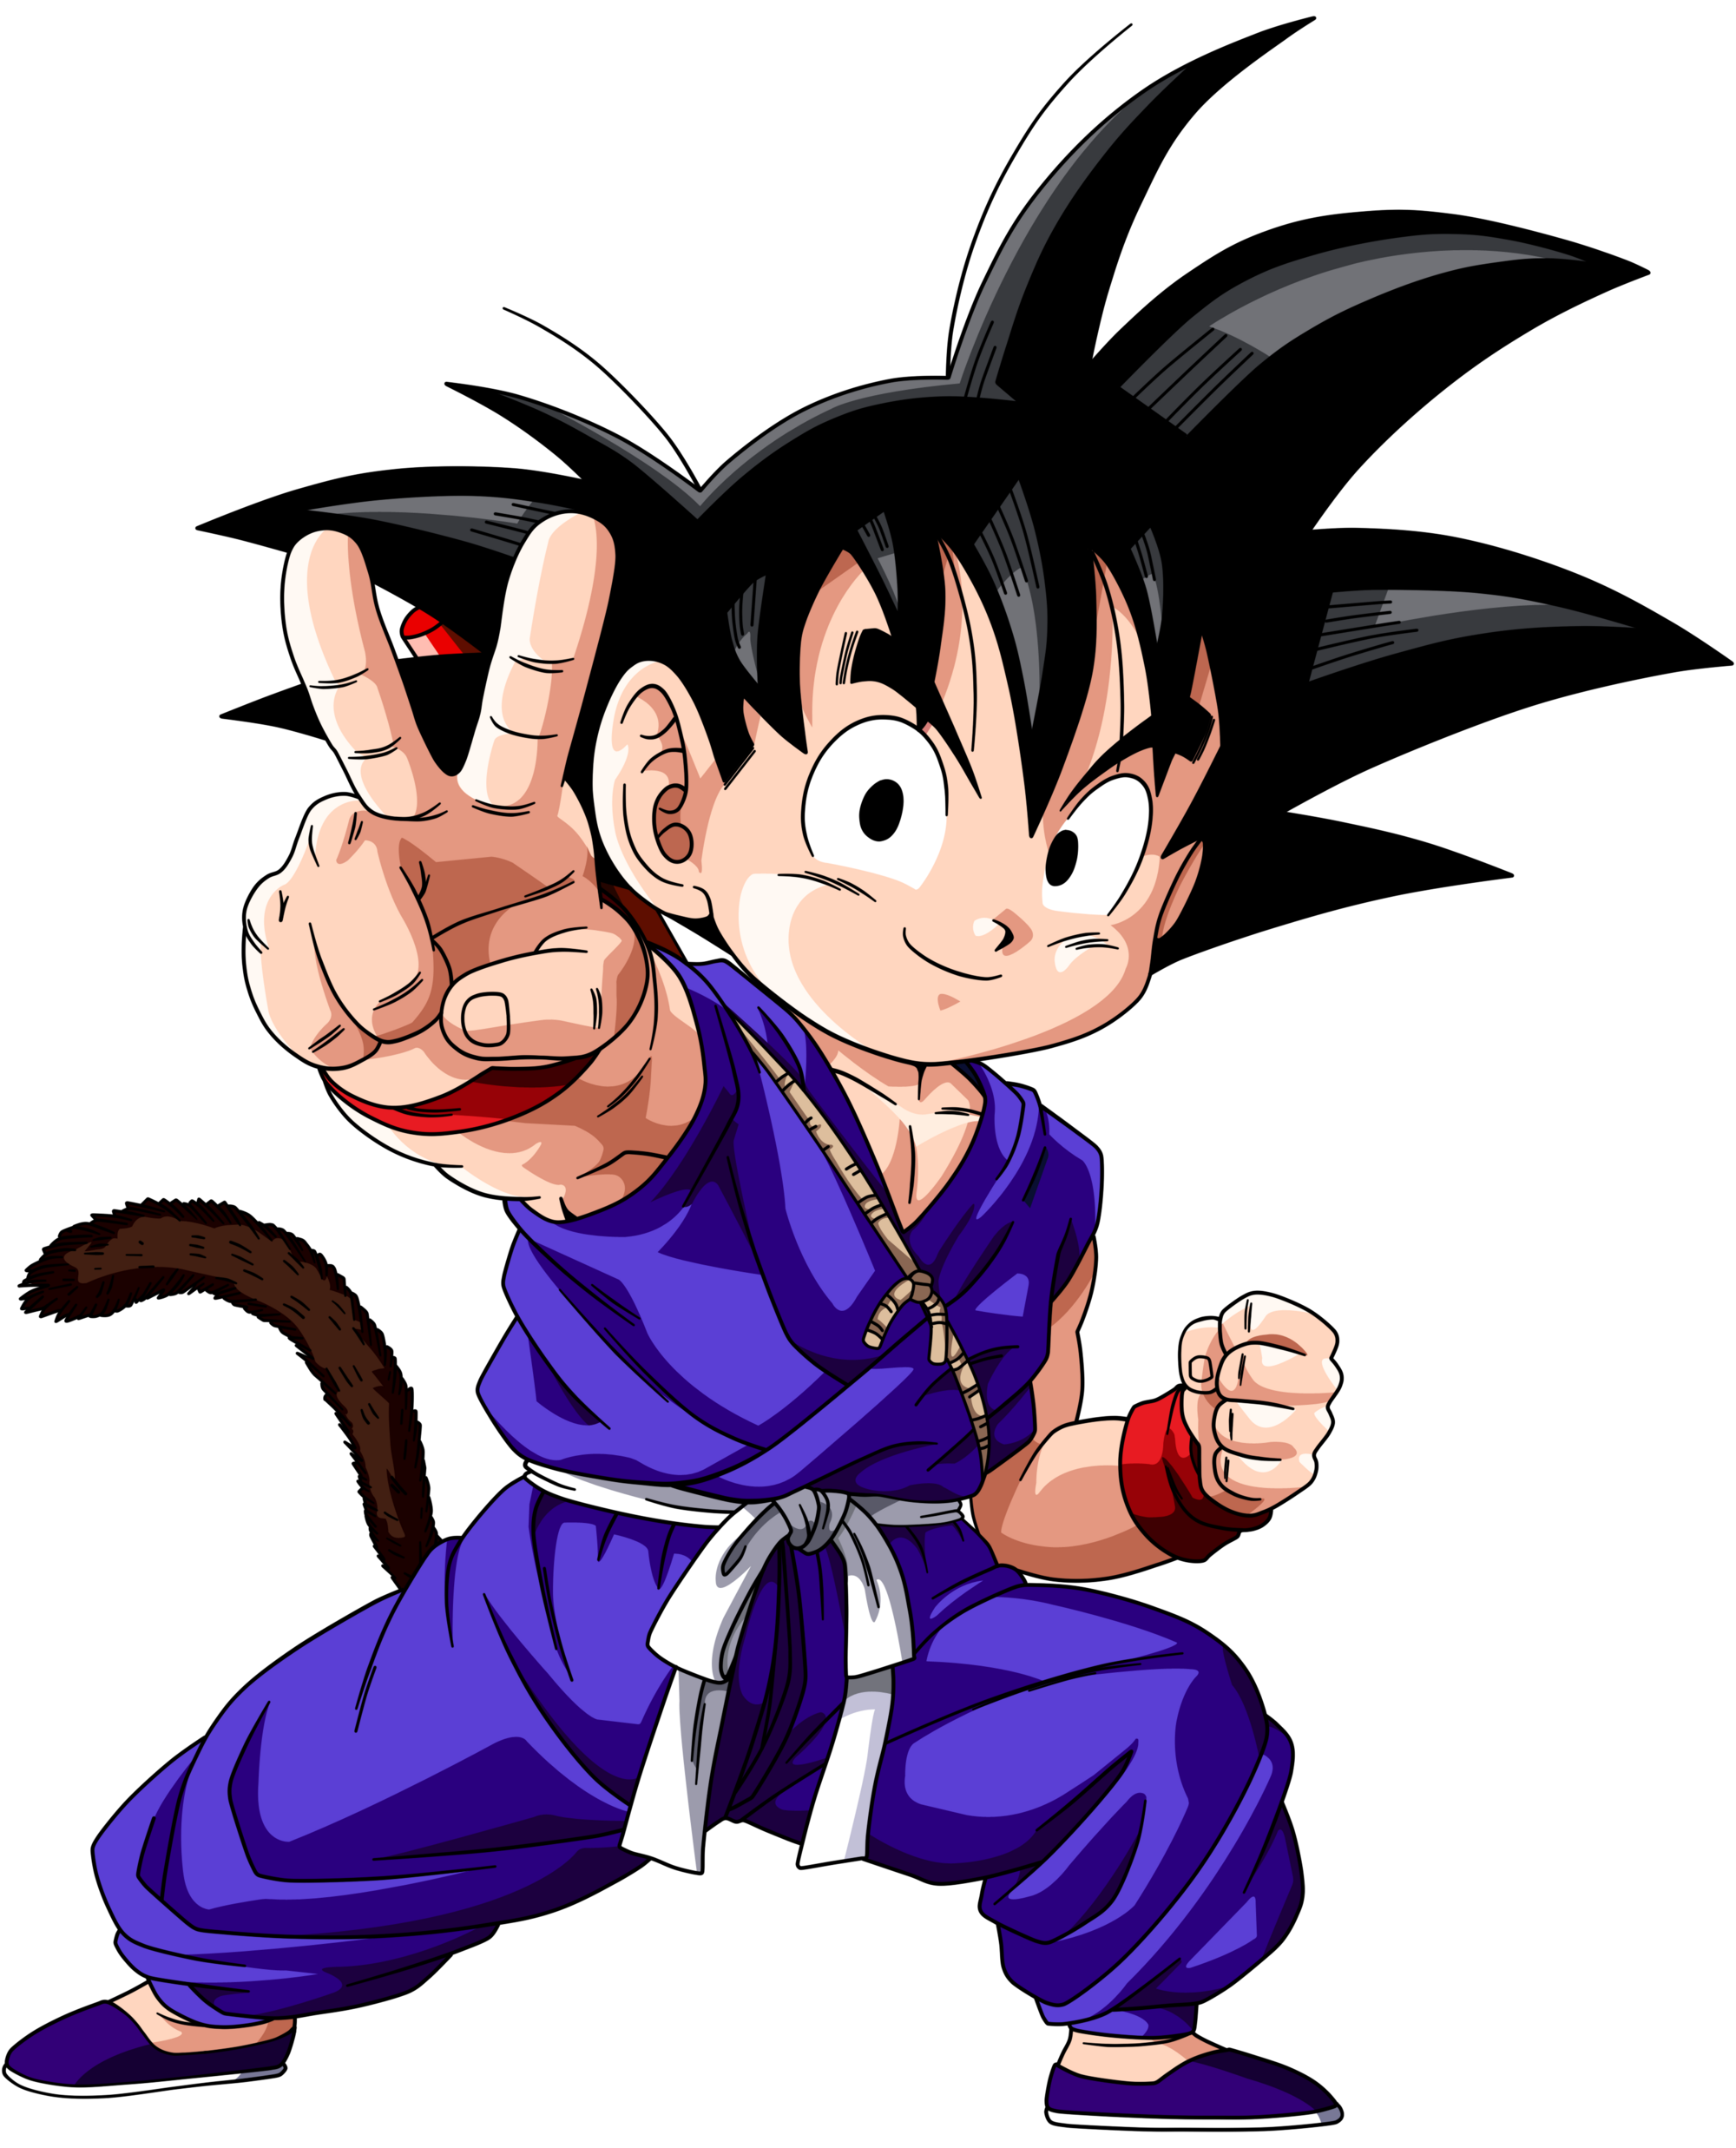 Goku. PERFECT POWER LEVEL LIST